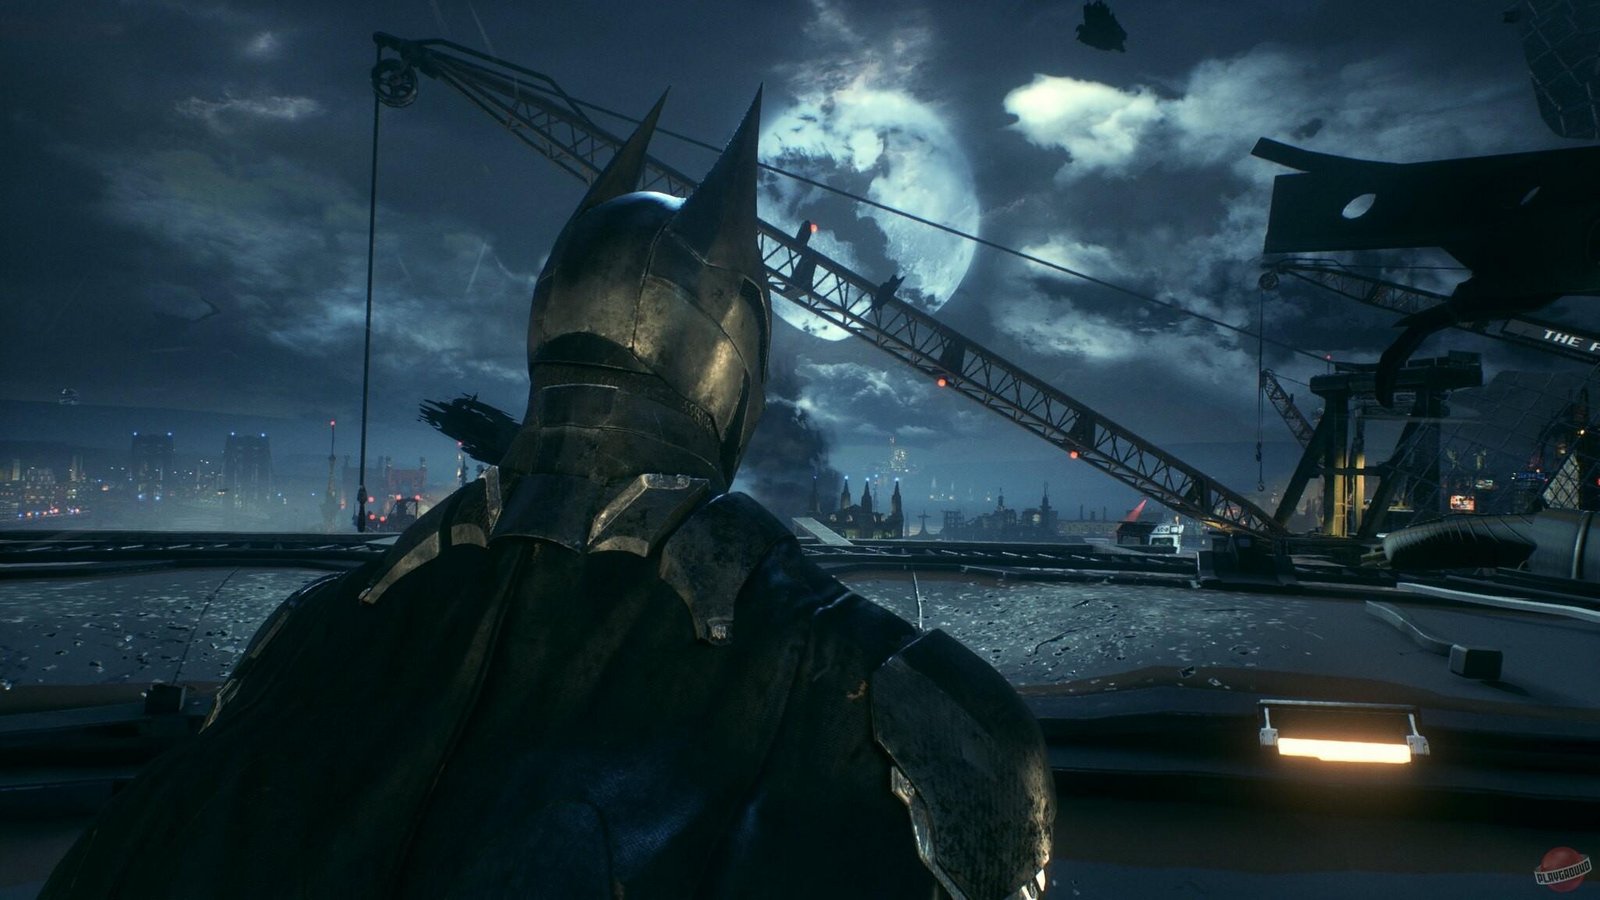 Batman: Arkham Knight - Red Hood